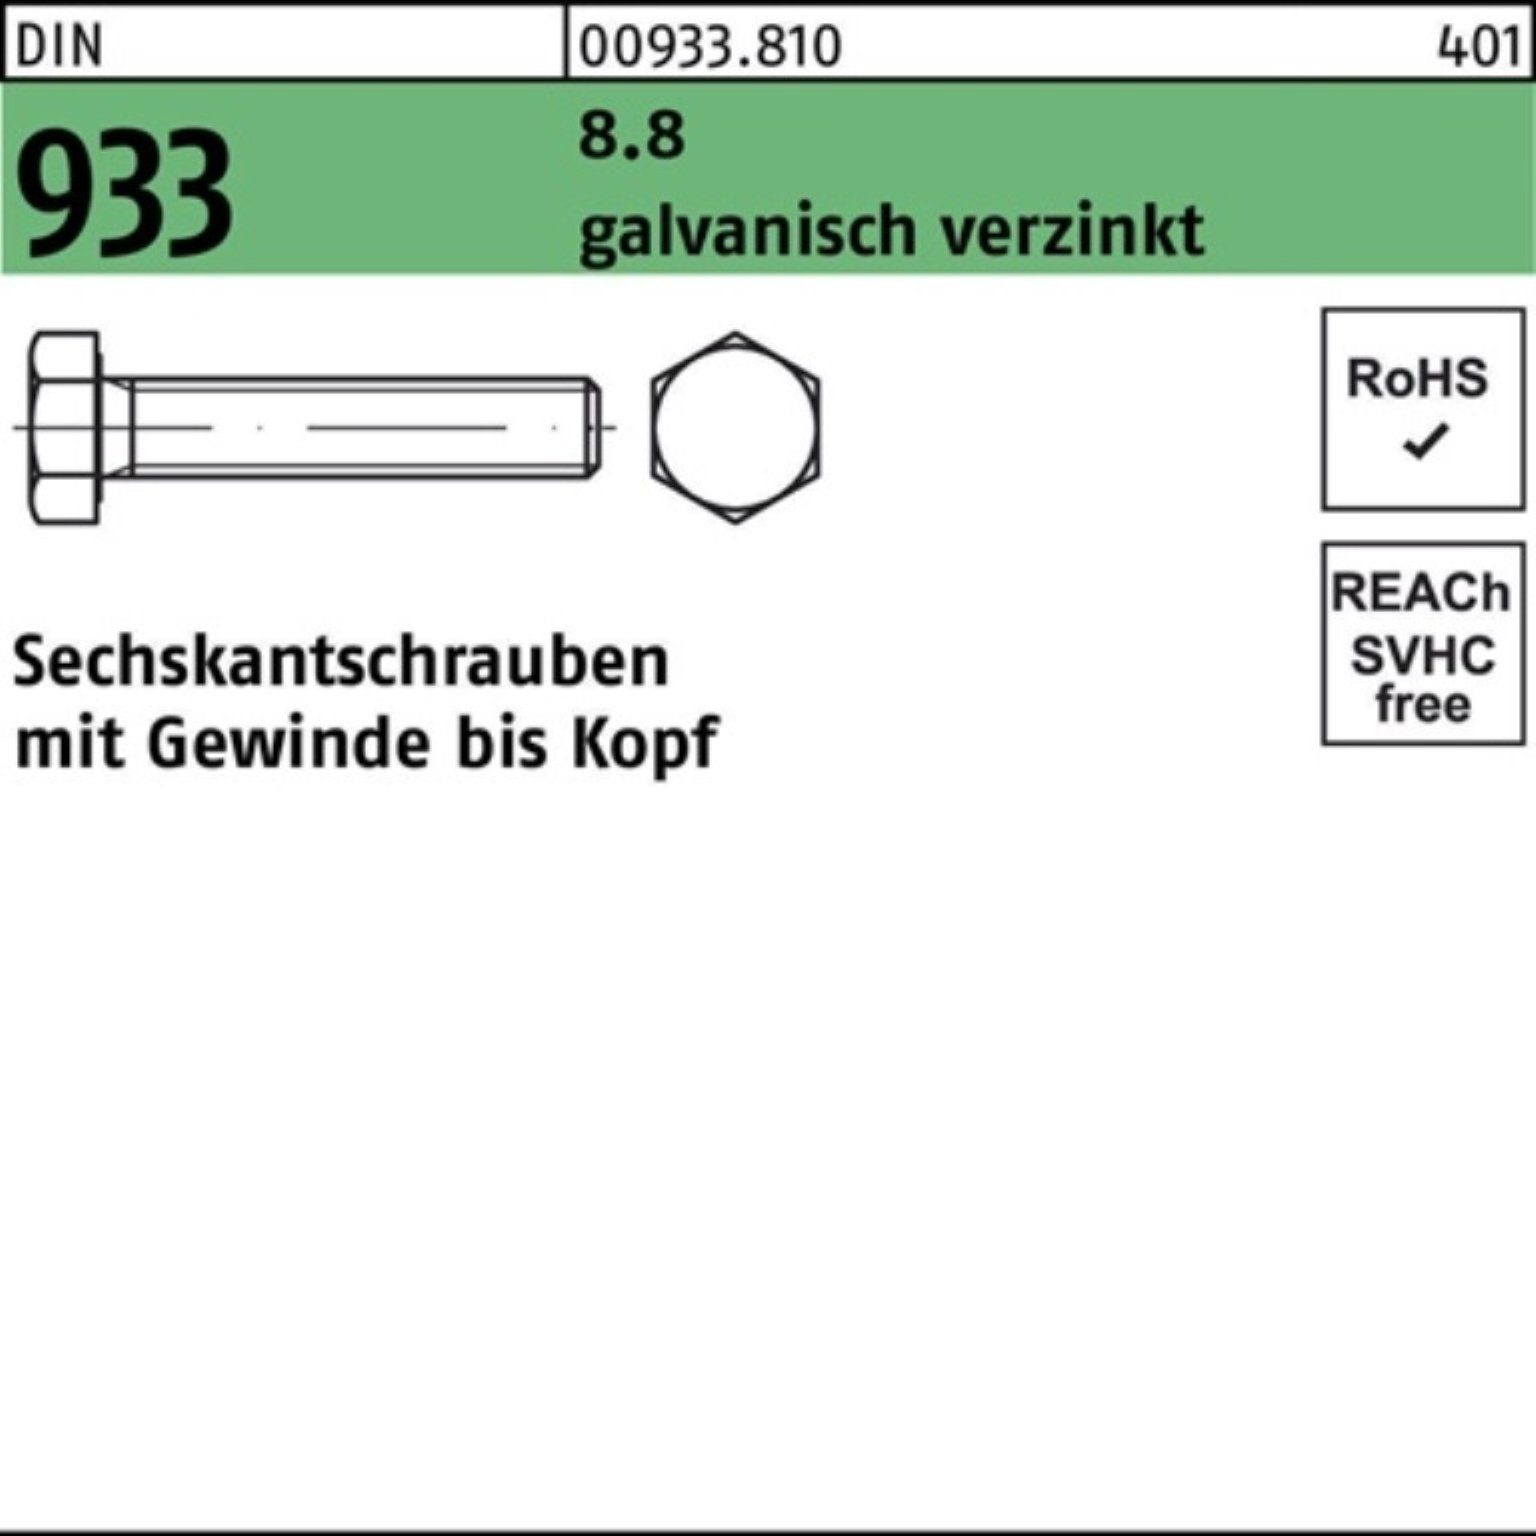 M16x Reyher 1 DIN Pack 933 Sechskantschraube 8.8 Sechskantschraube VG galv.verz. Stü 220 100er